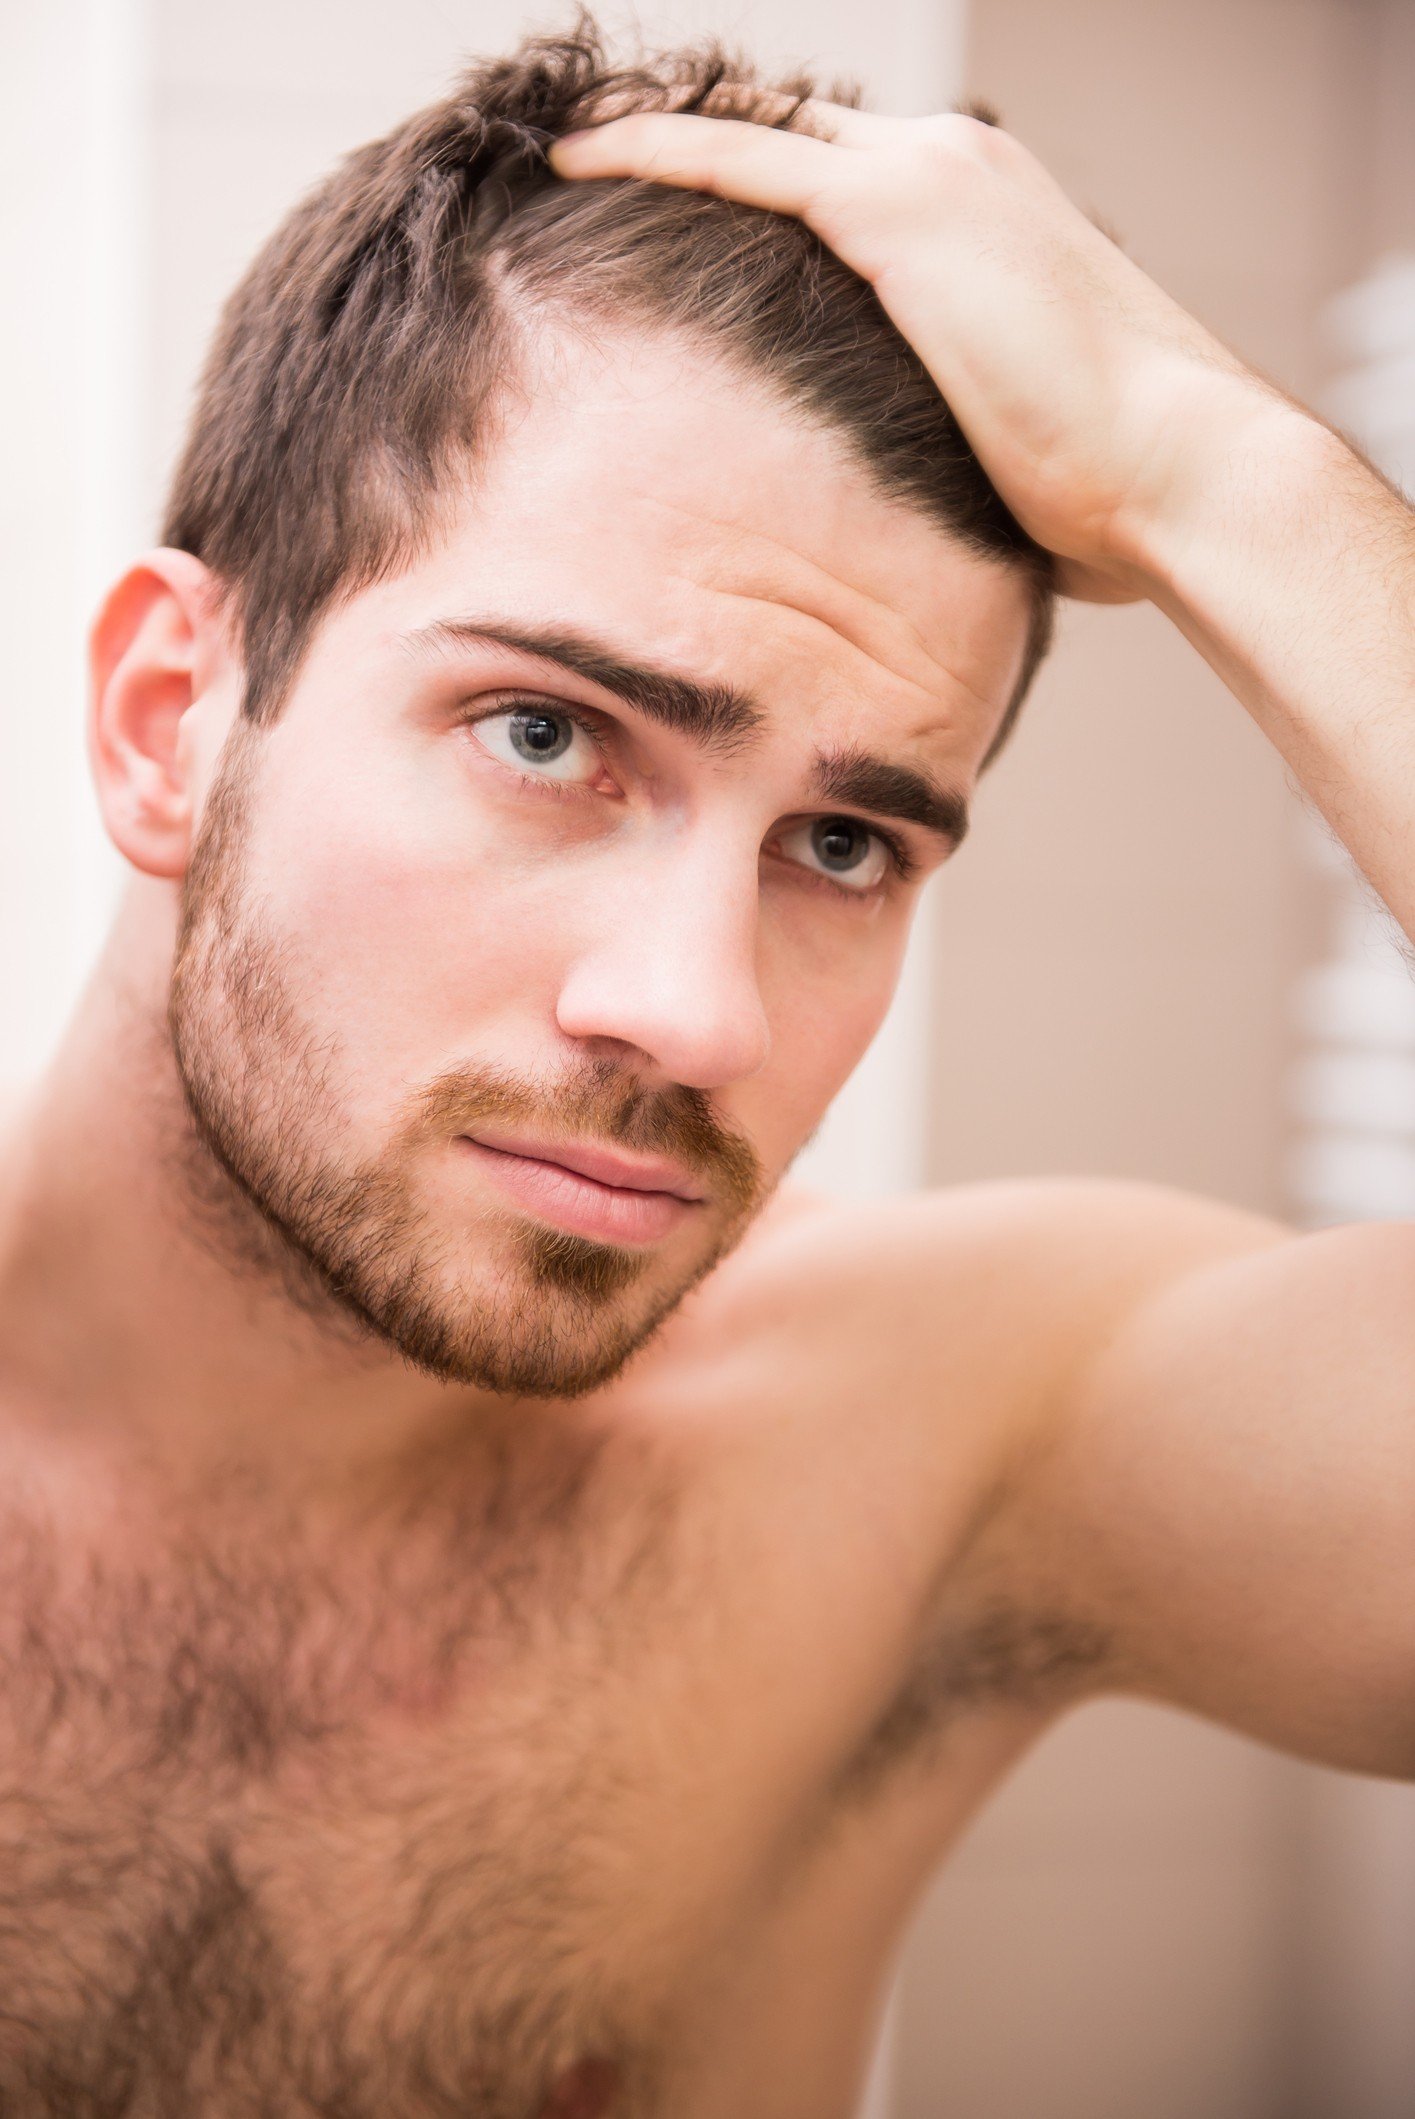 Glatze geheimratsecken radtaiceta: Frisur